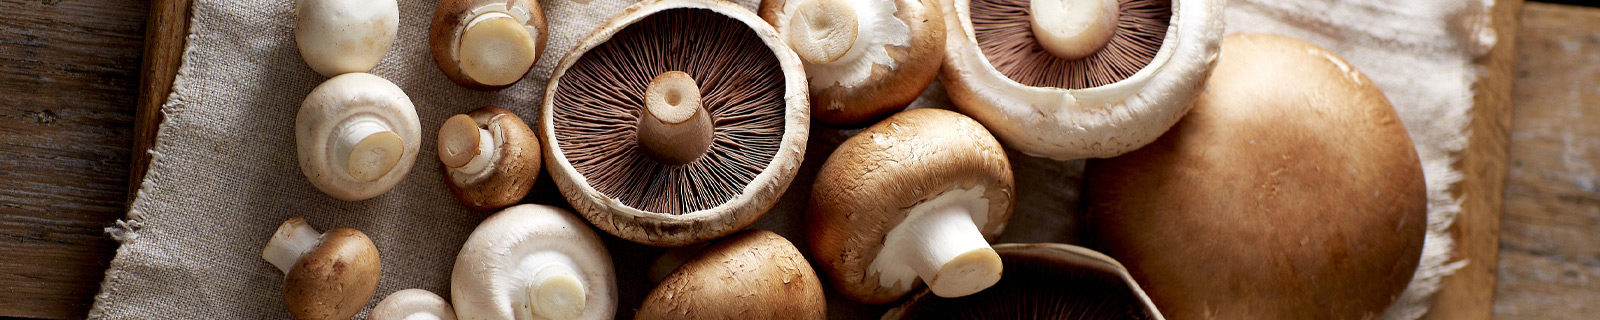 Monaghan selection of mushrooms